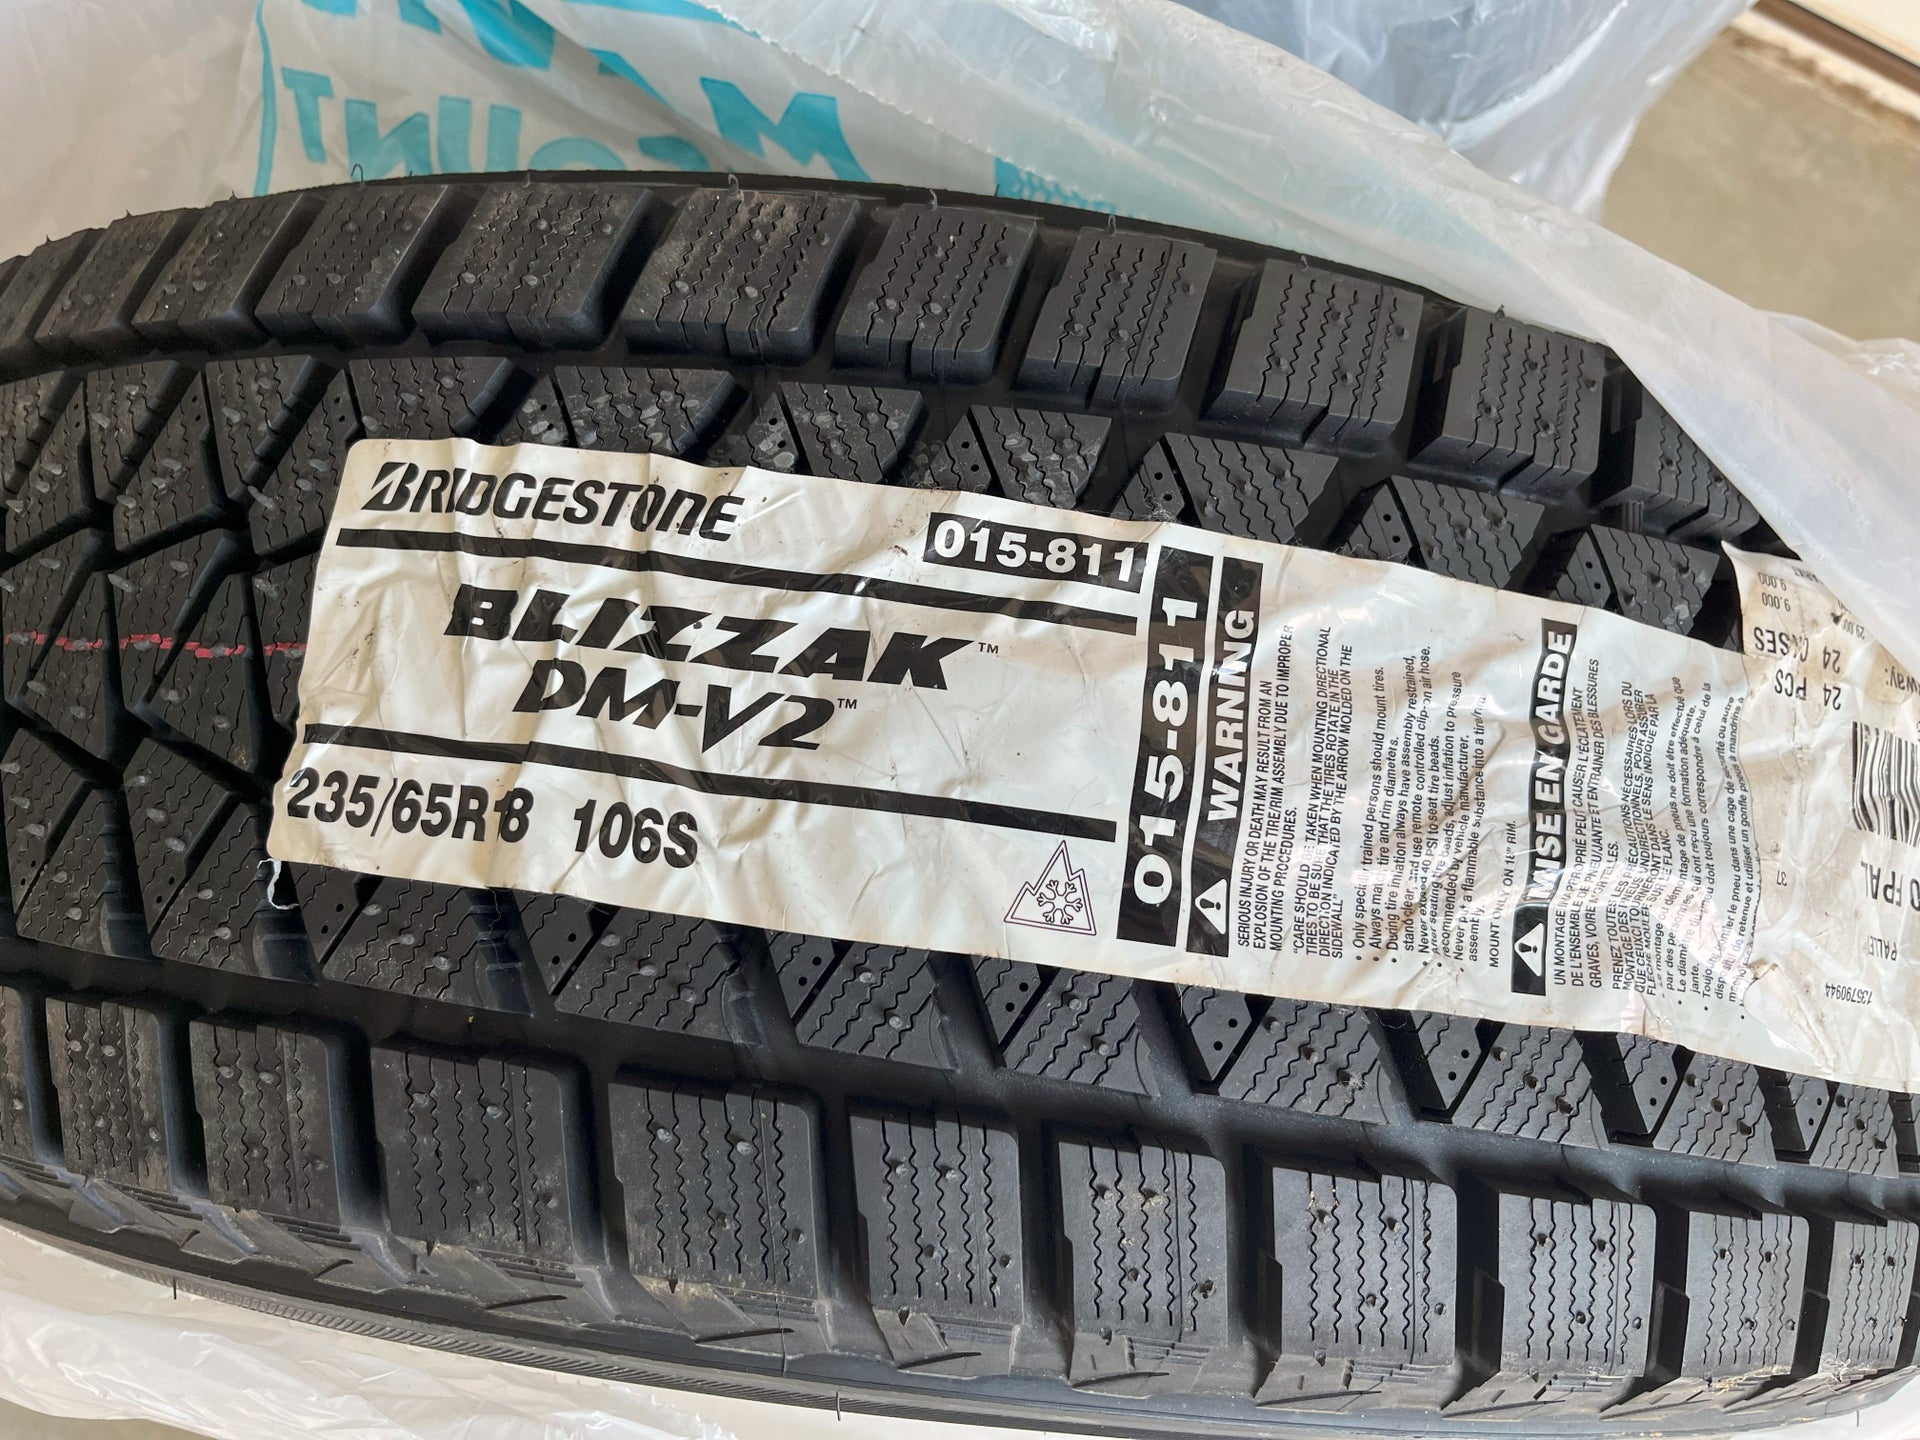 Brand New: 4x Bridgestone Blizzak DM-V2 Winter Tires, 235/65R18